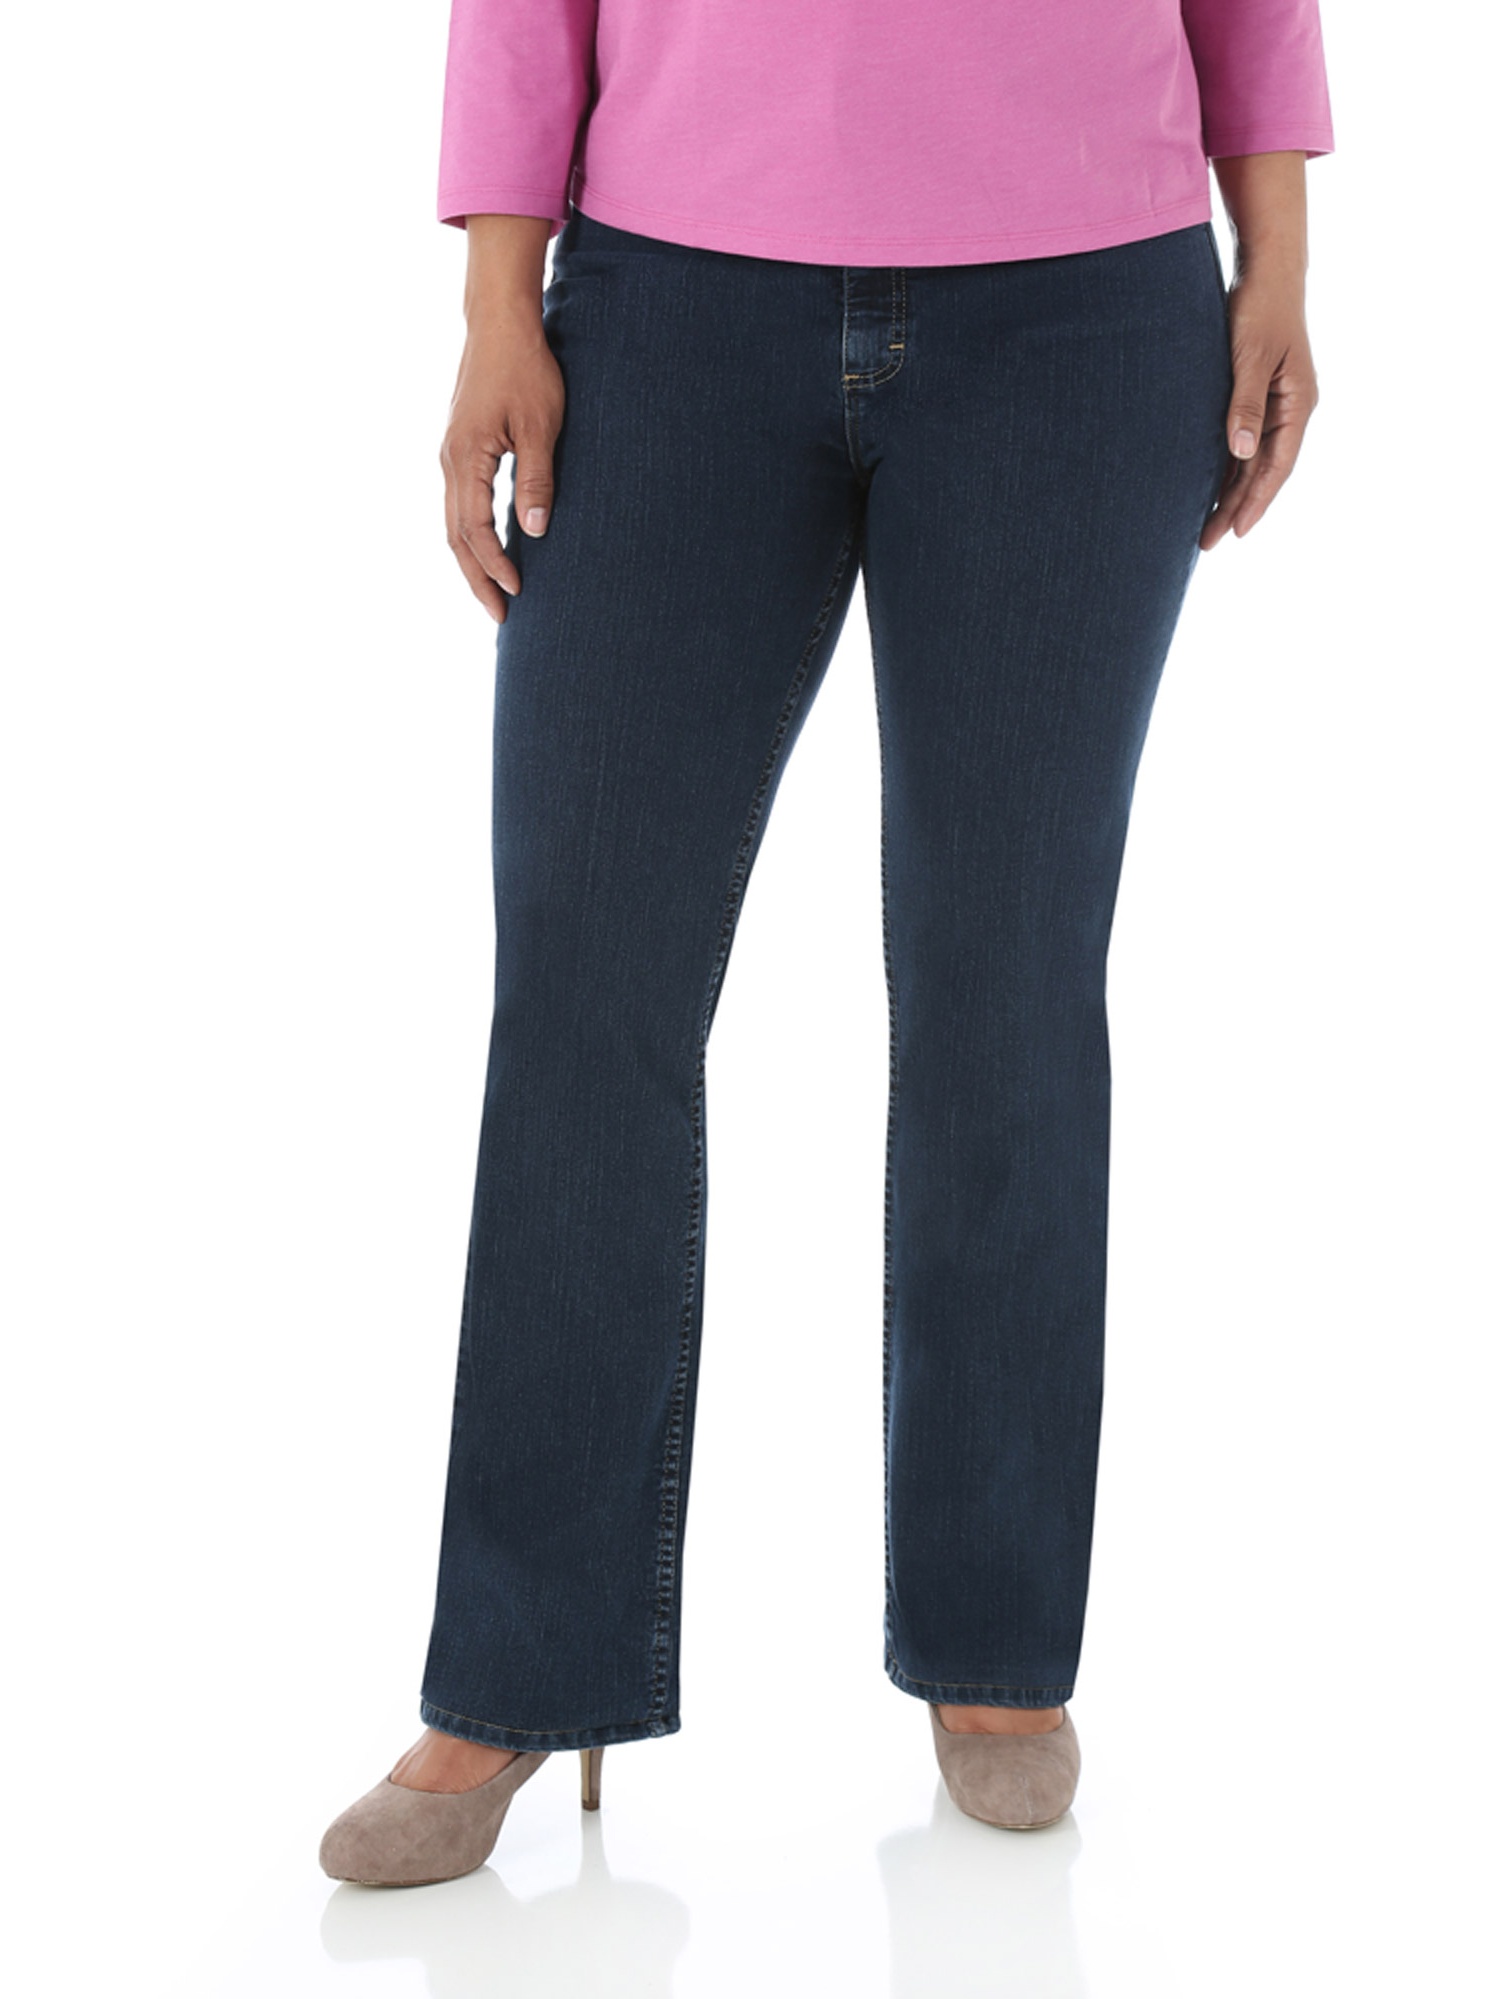 Women's Plus-Size Classic Comfort Jeans, Petite - image 1 of 4